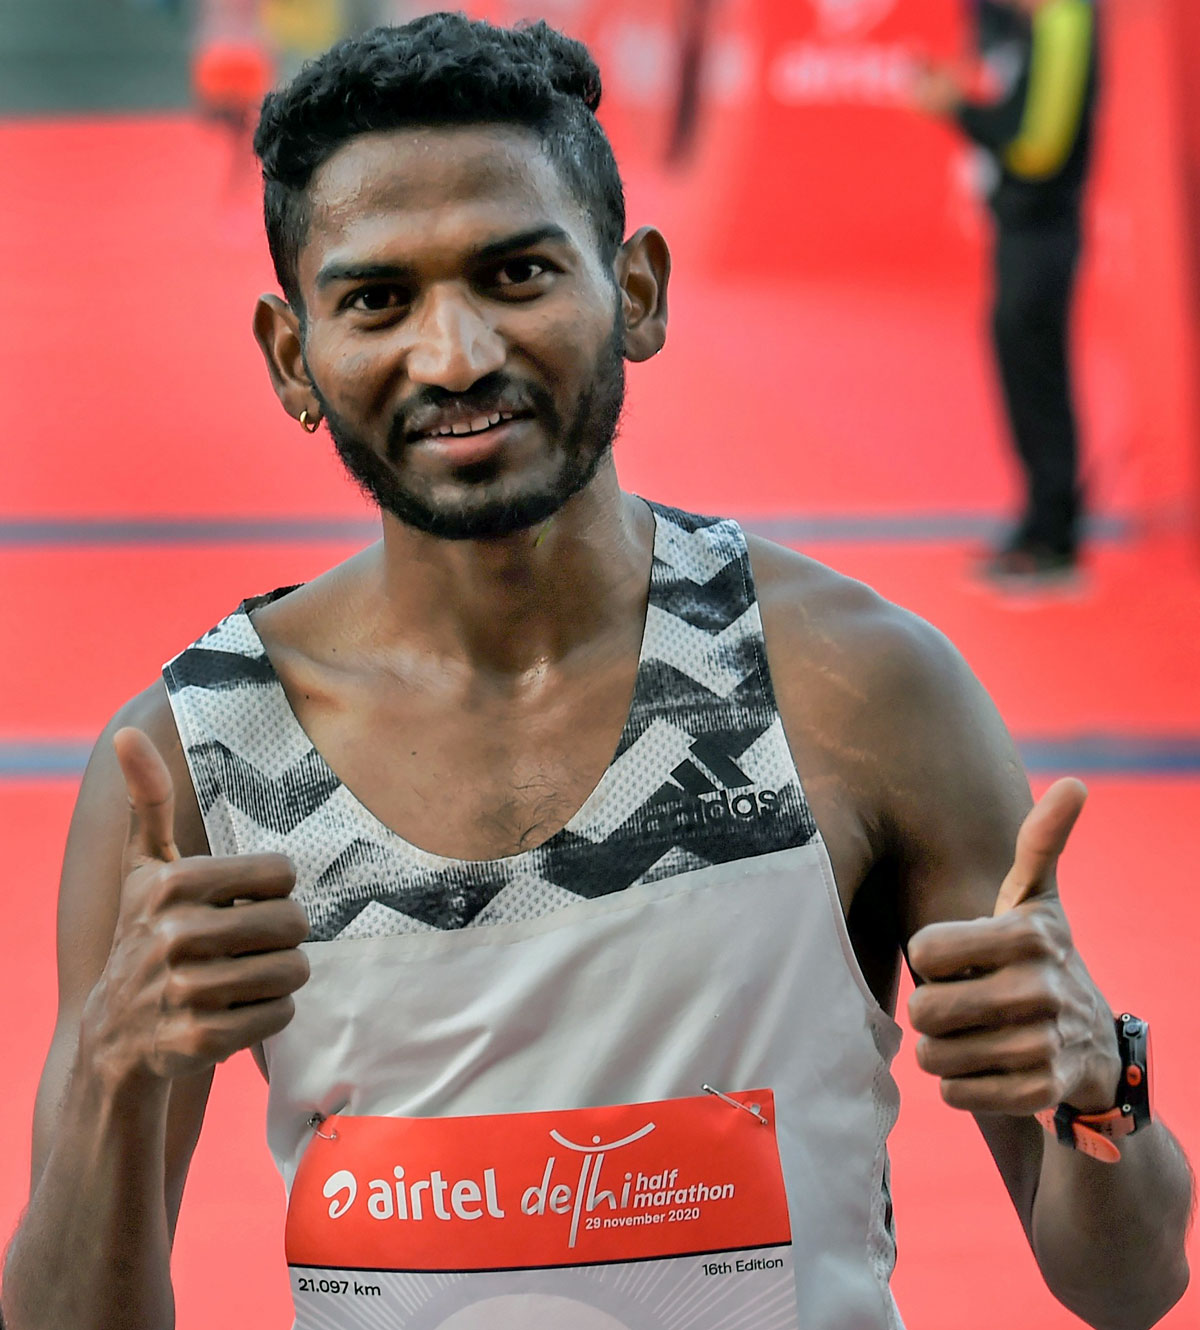 Olympic-bound Sable breaks record at Delhi half marathon - Rediff Sports